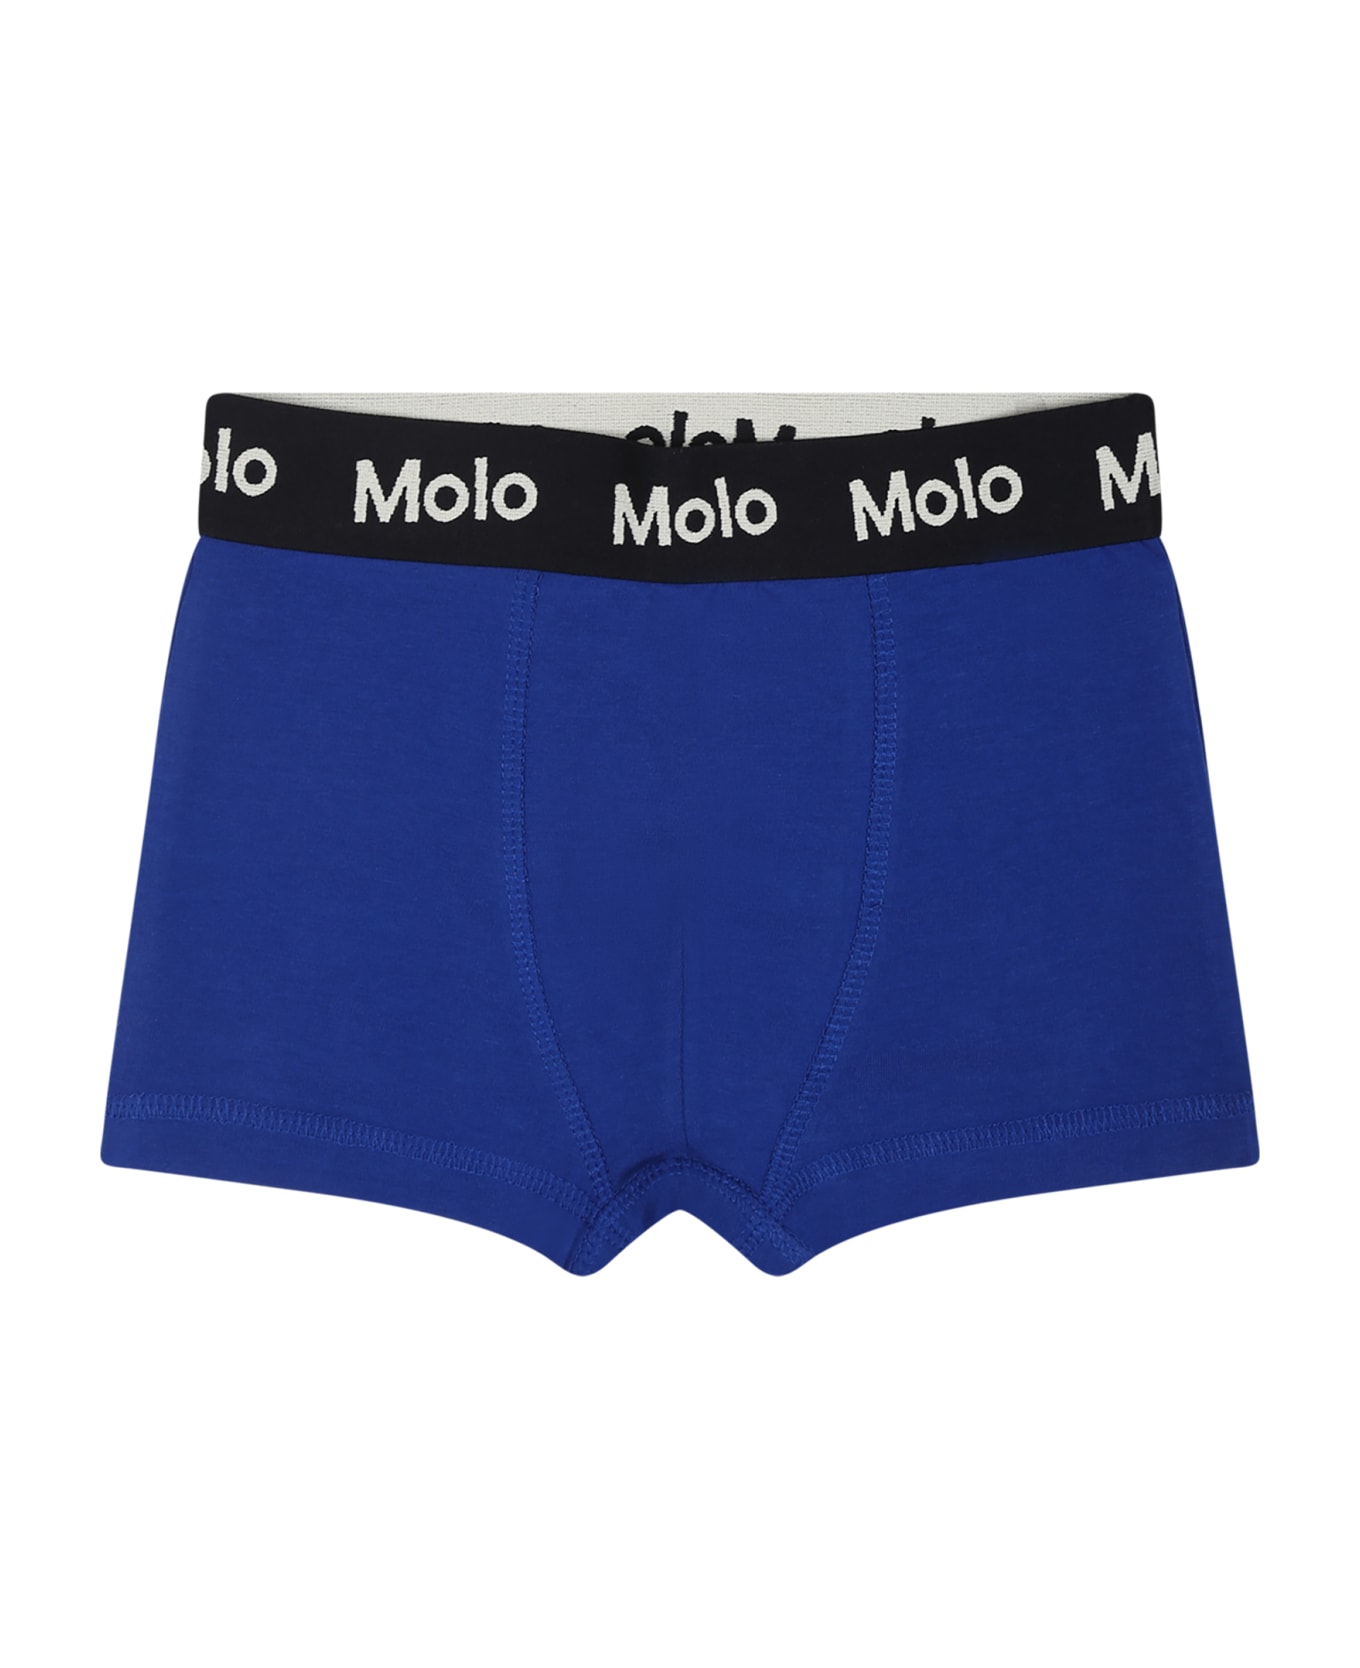 Molo Multicolor Set For Kids - Blue